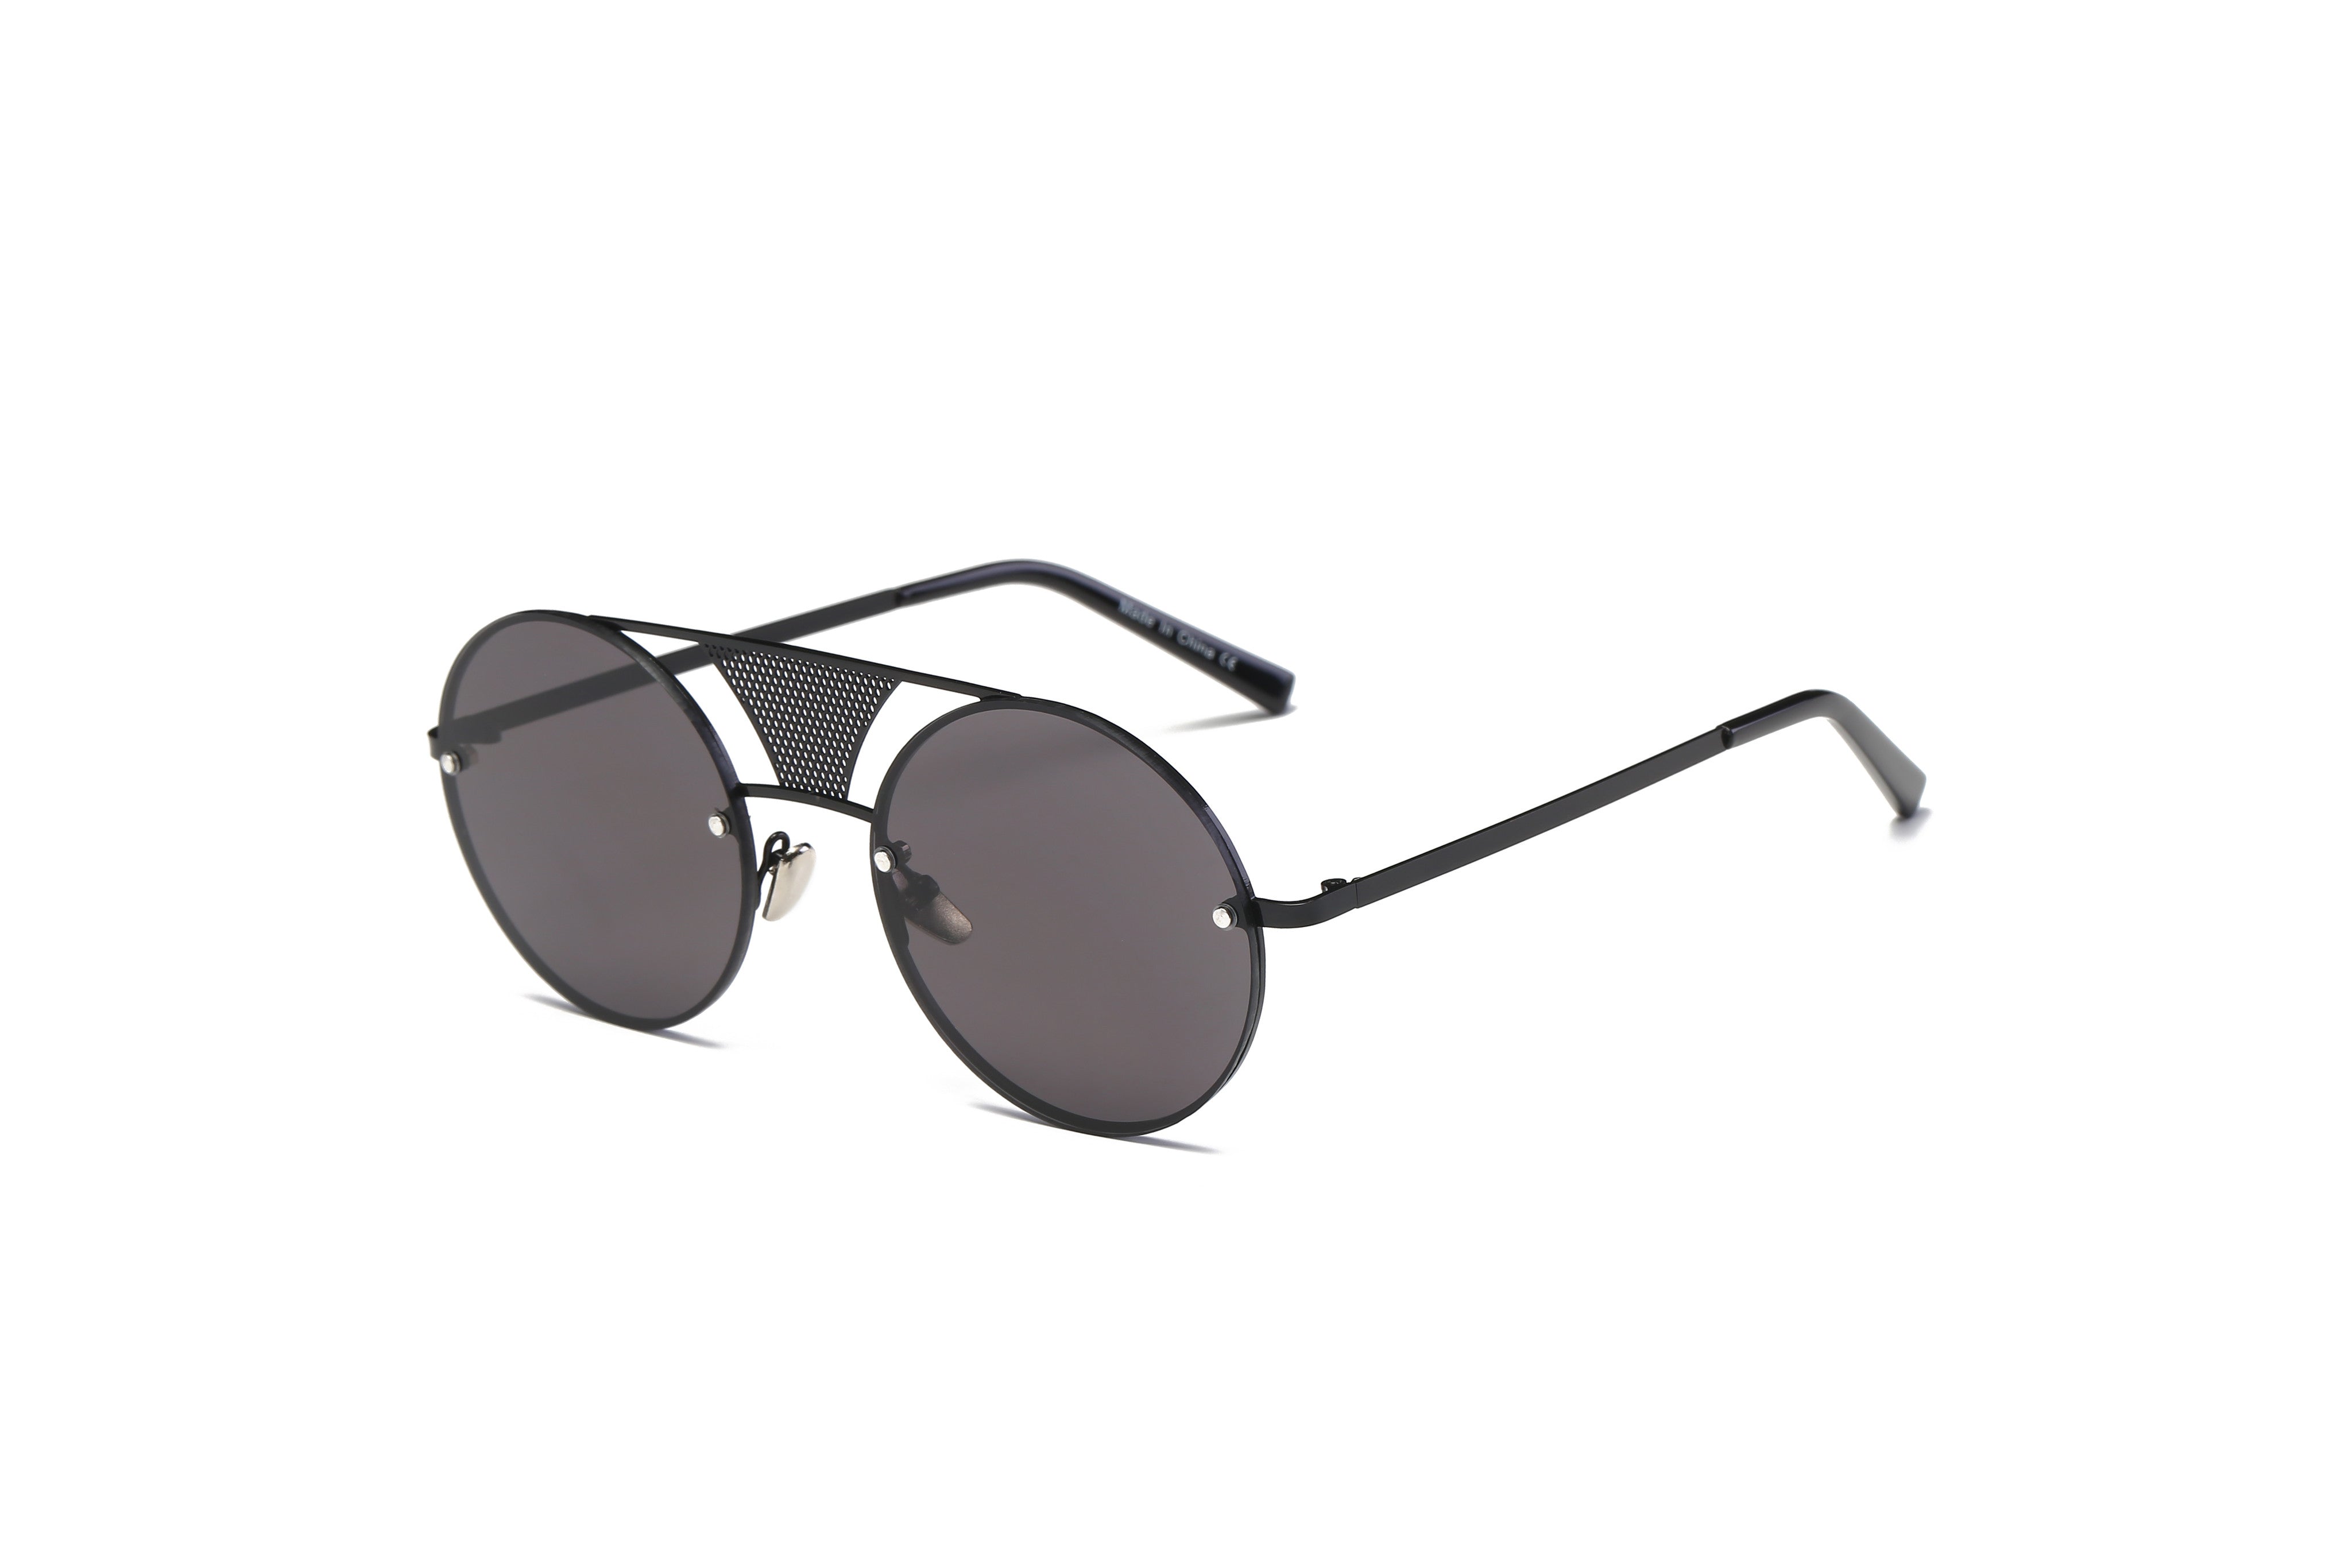 S2012 - Retro Round Brow-Bar Circle Fashion Wholesale Sunglasses Black FRAME - Black Lens